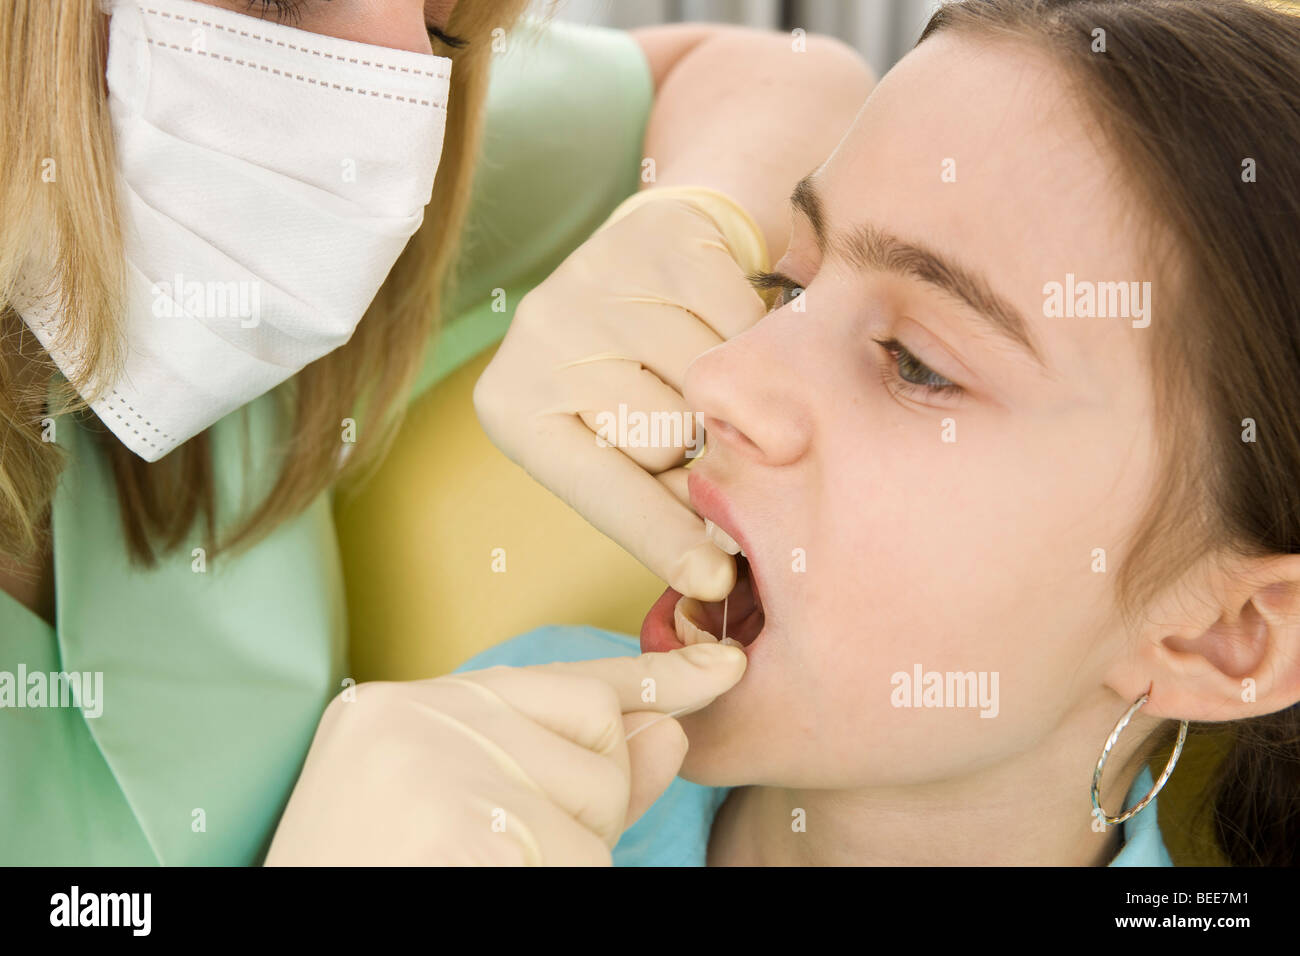 Dental nurse cleaning a girl's teeth with dental floss Stock Photo